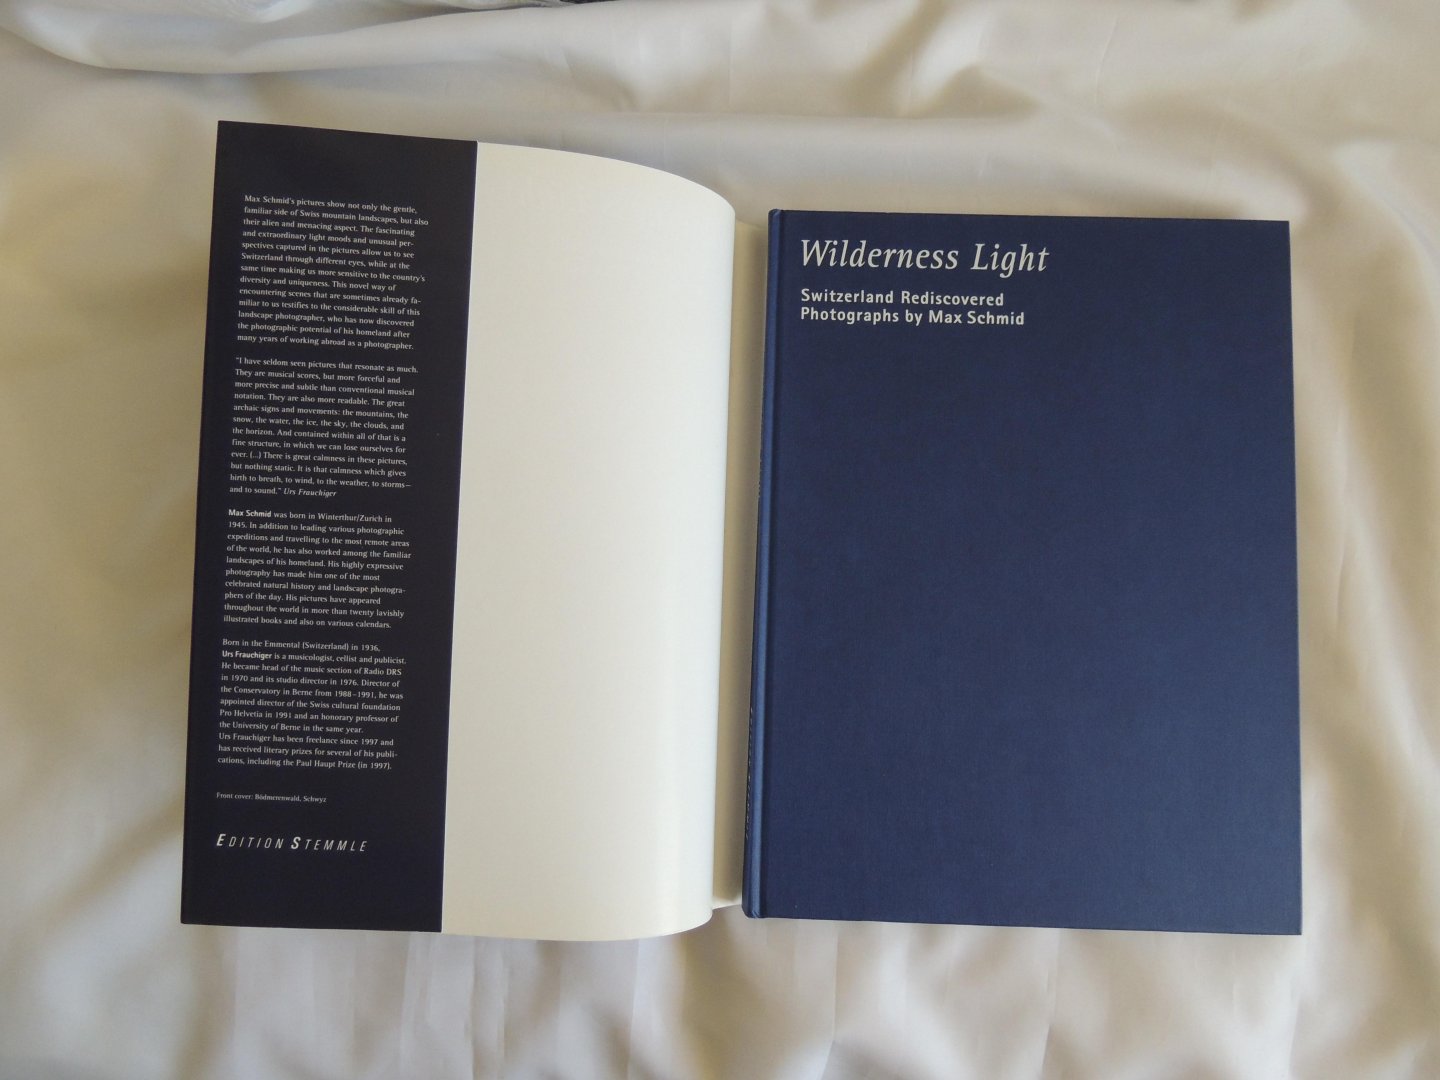 Frauchiger, Urs; Illustrator : Schmid, Max - Wilderness Light Switzerland Rediscovered